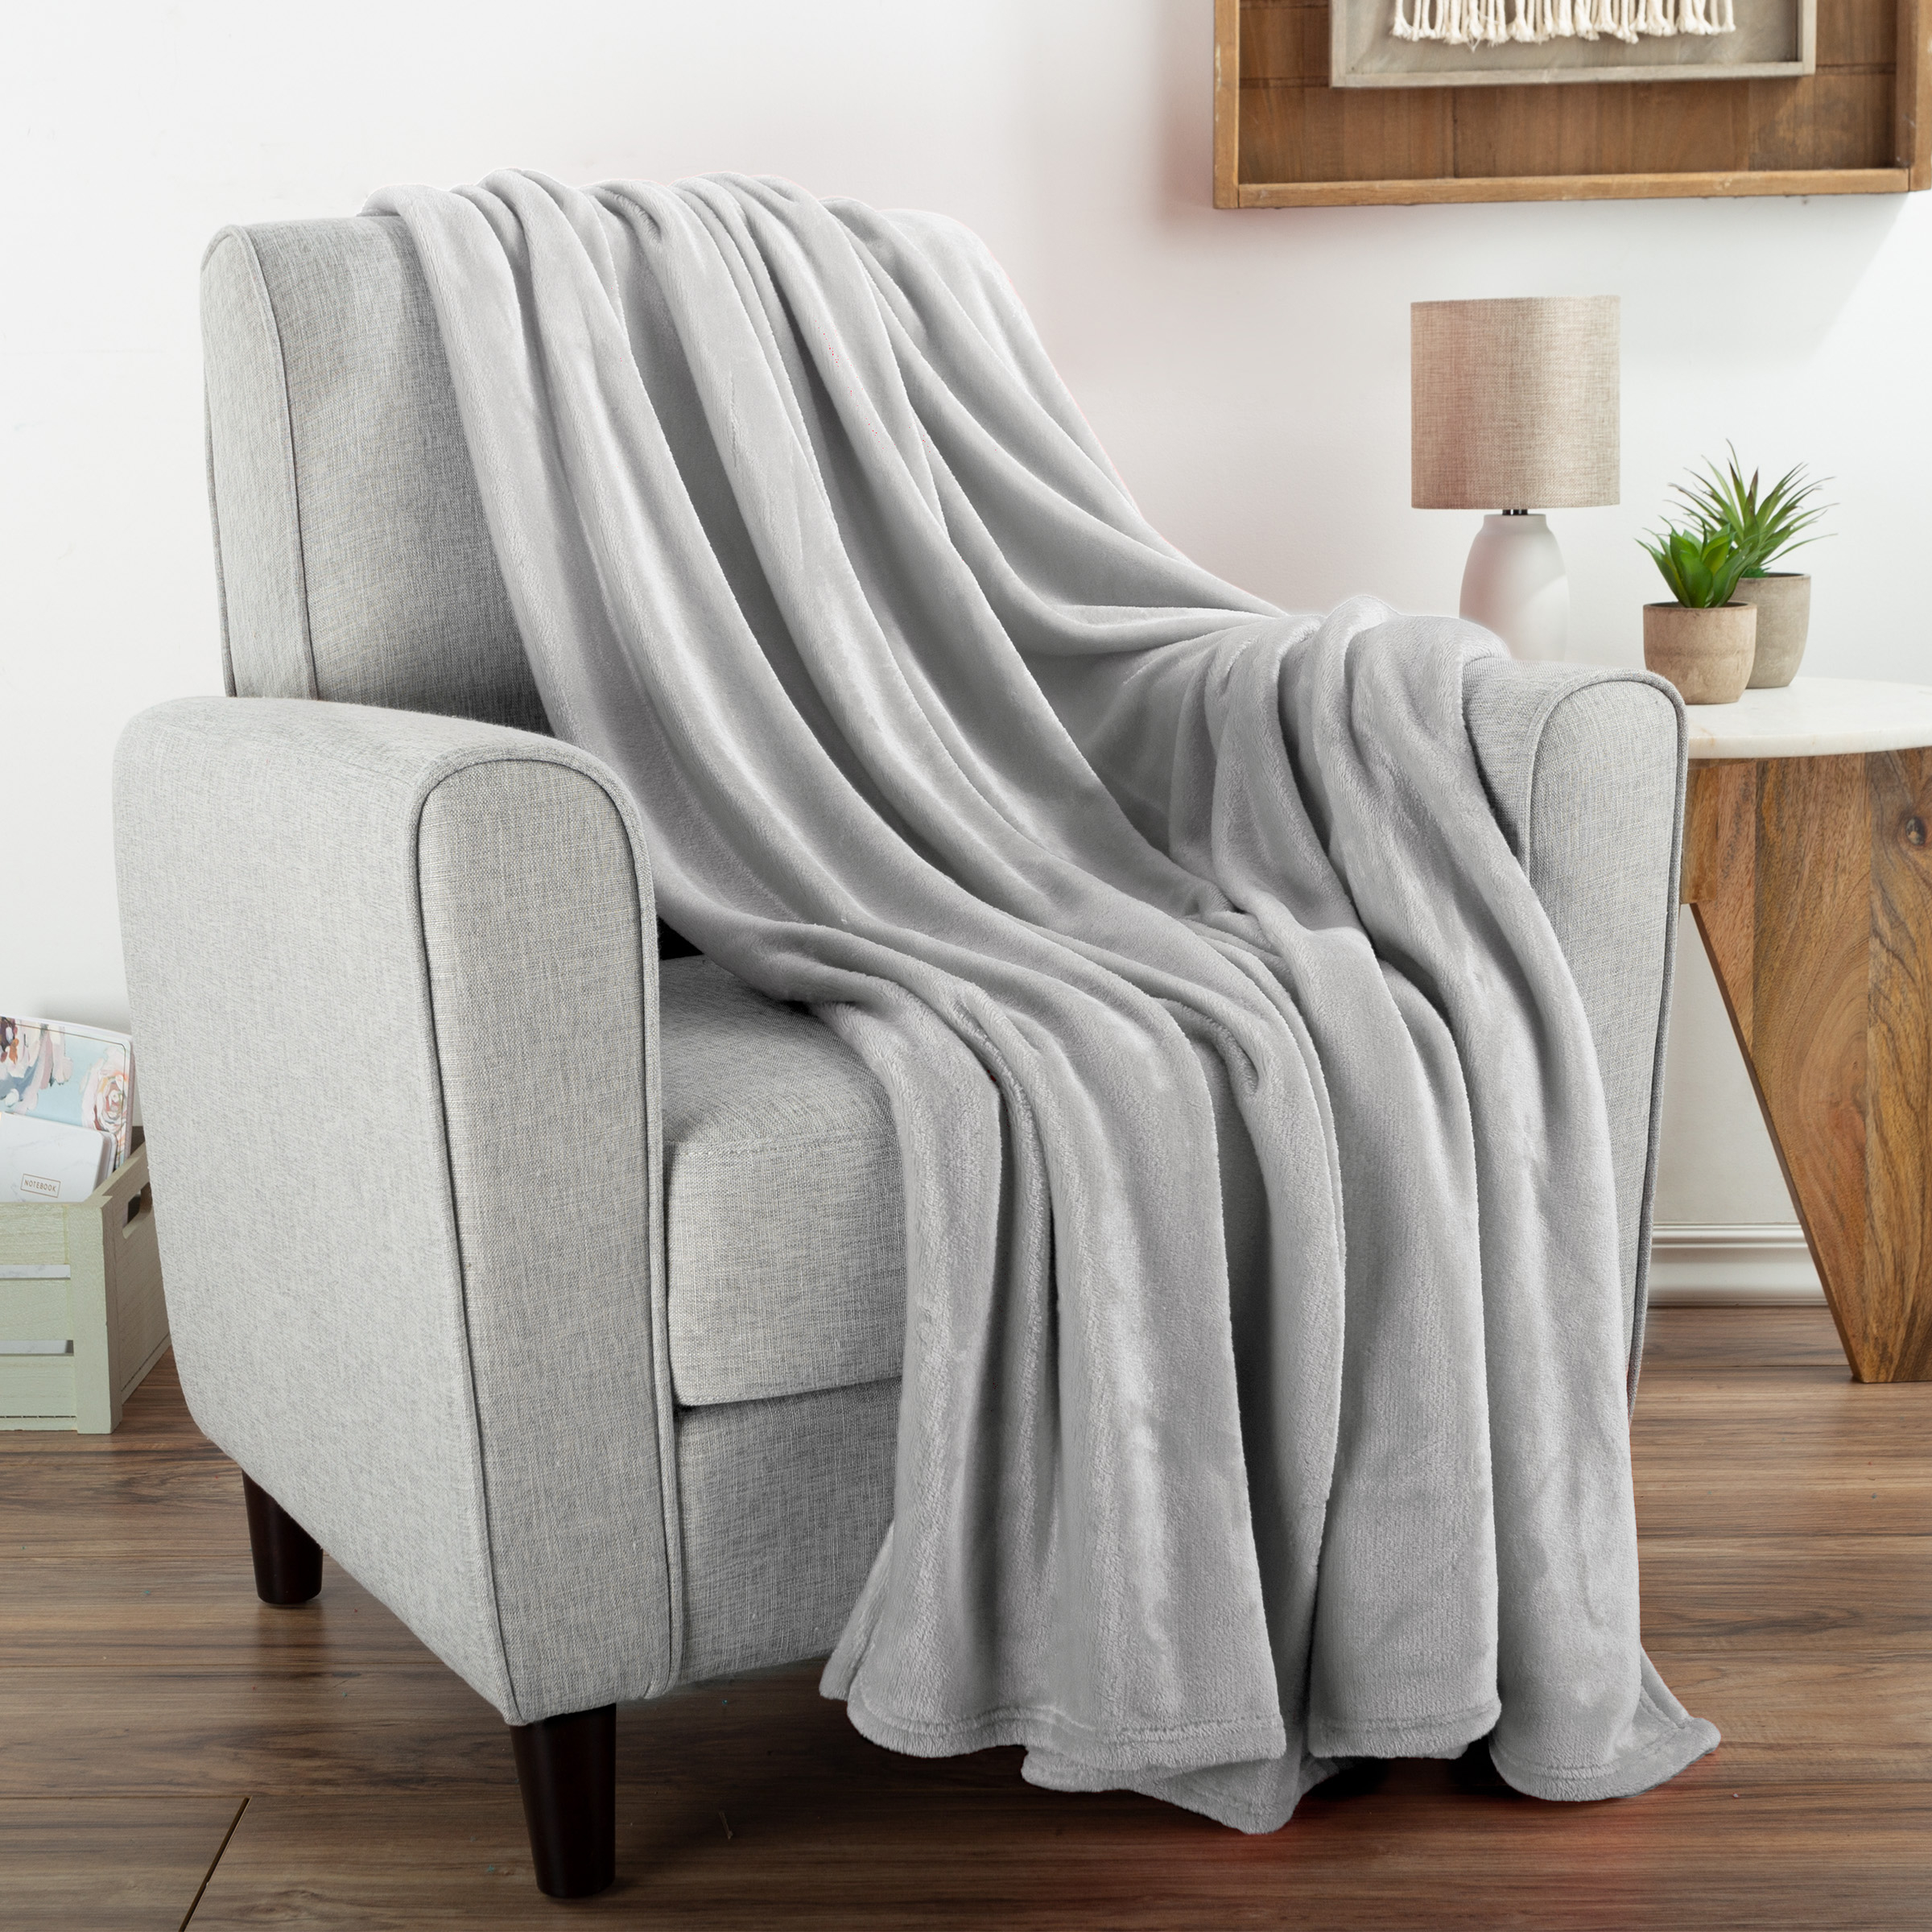 Fleece Throw Blanket- For Couch, Home Décor, Sofa & Chair- Oversized 60” X 70”- Lightweight, Soft & Plush Microfiber - Gray